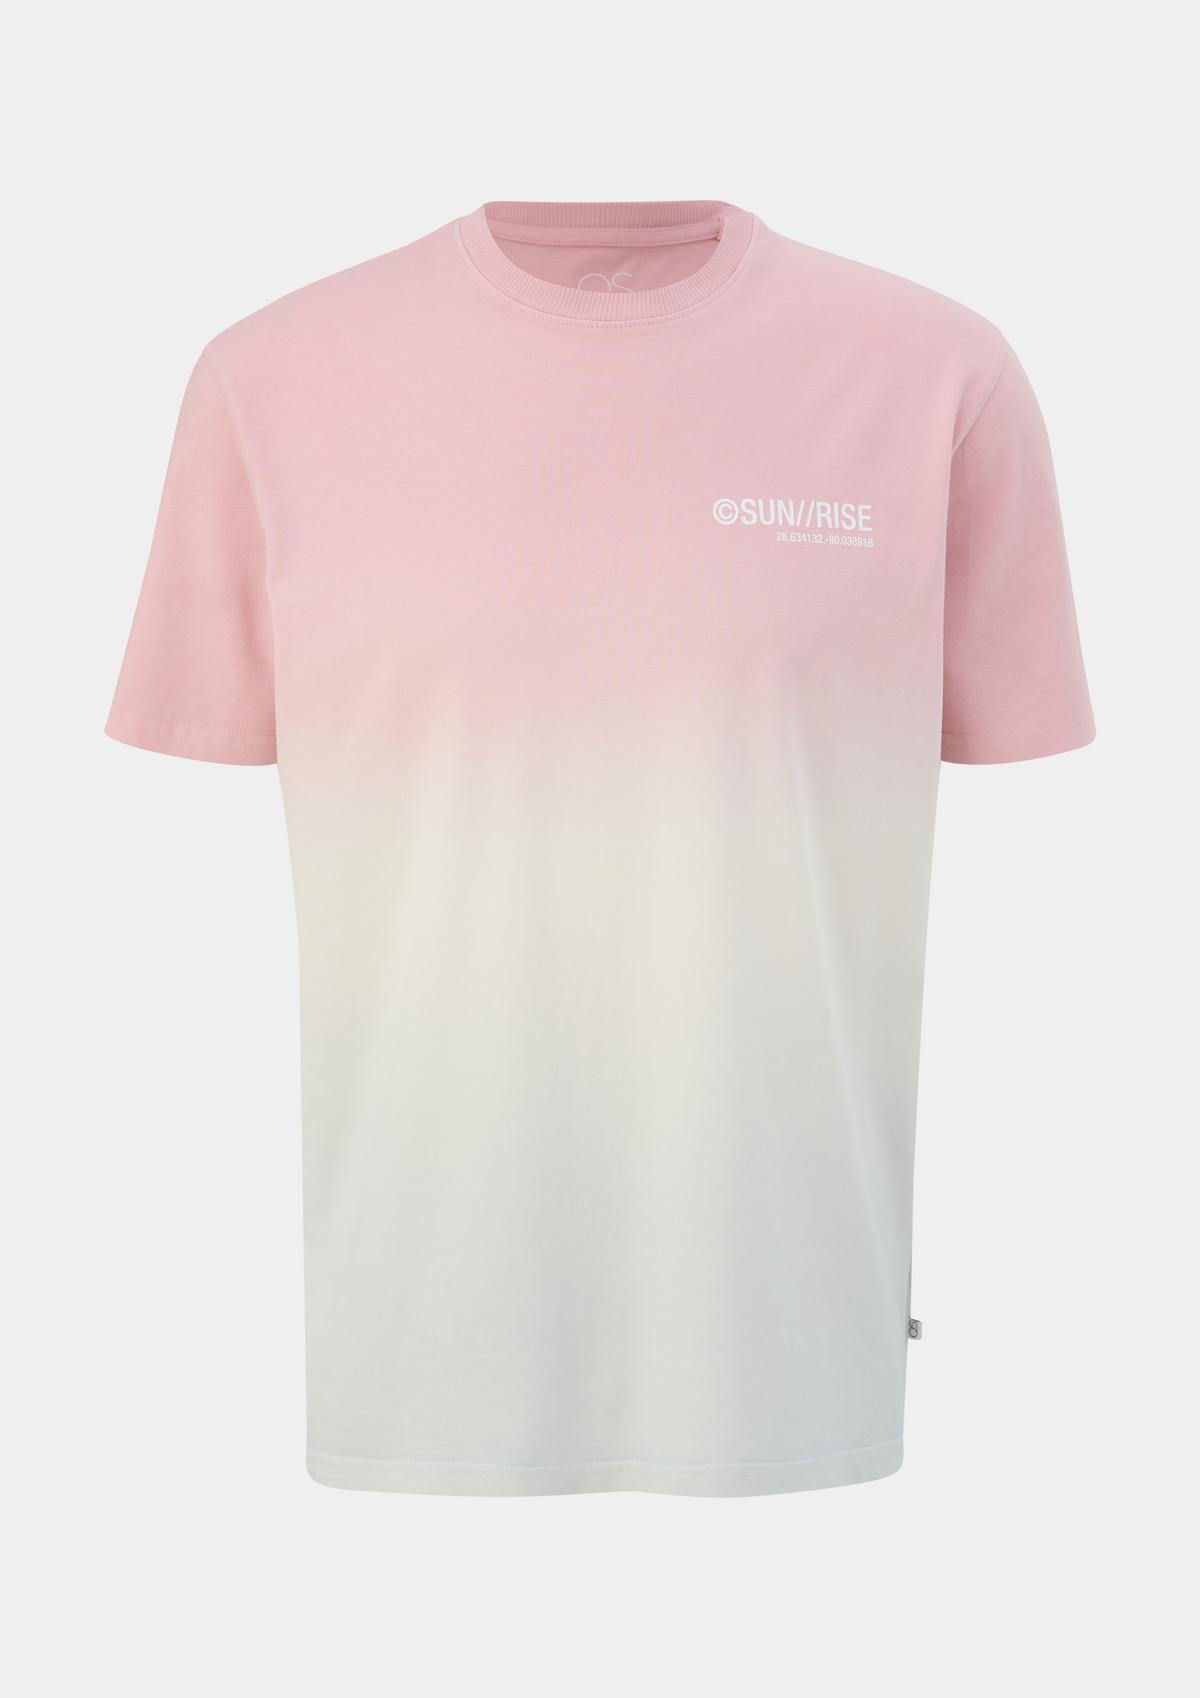 - Farbverlauf mit rosa Baumwollshirt